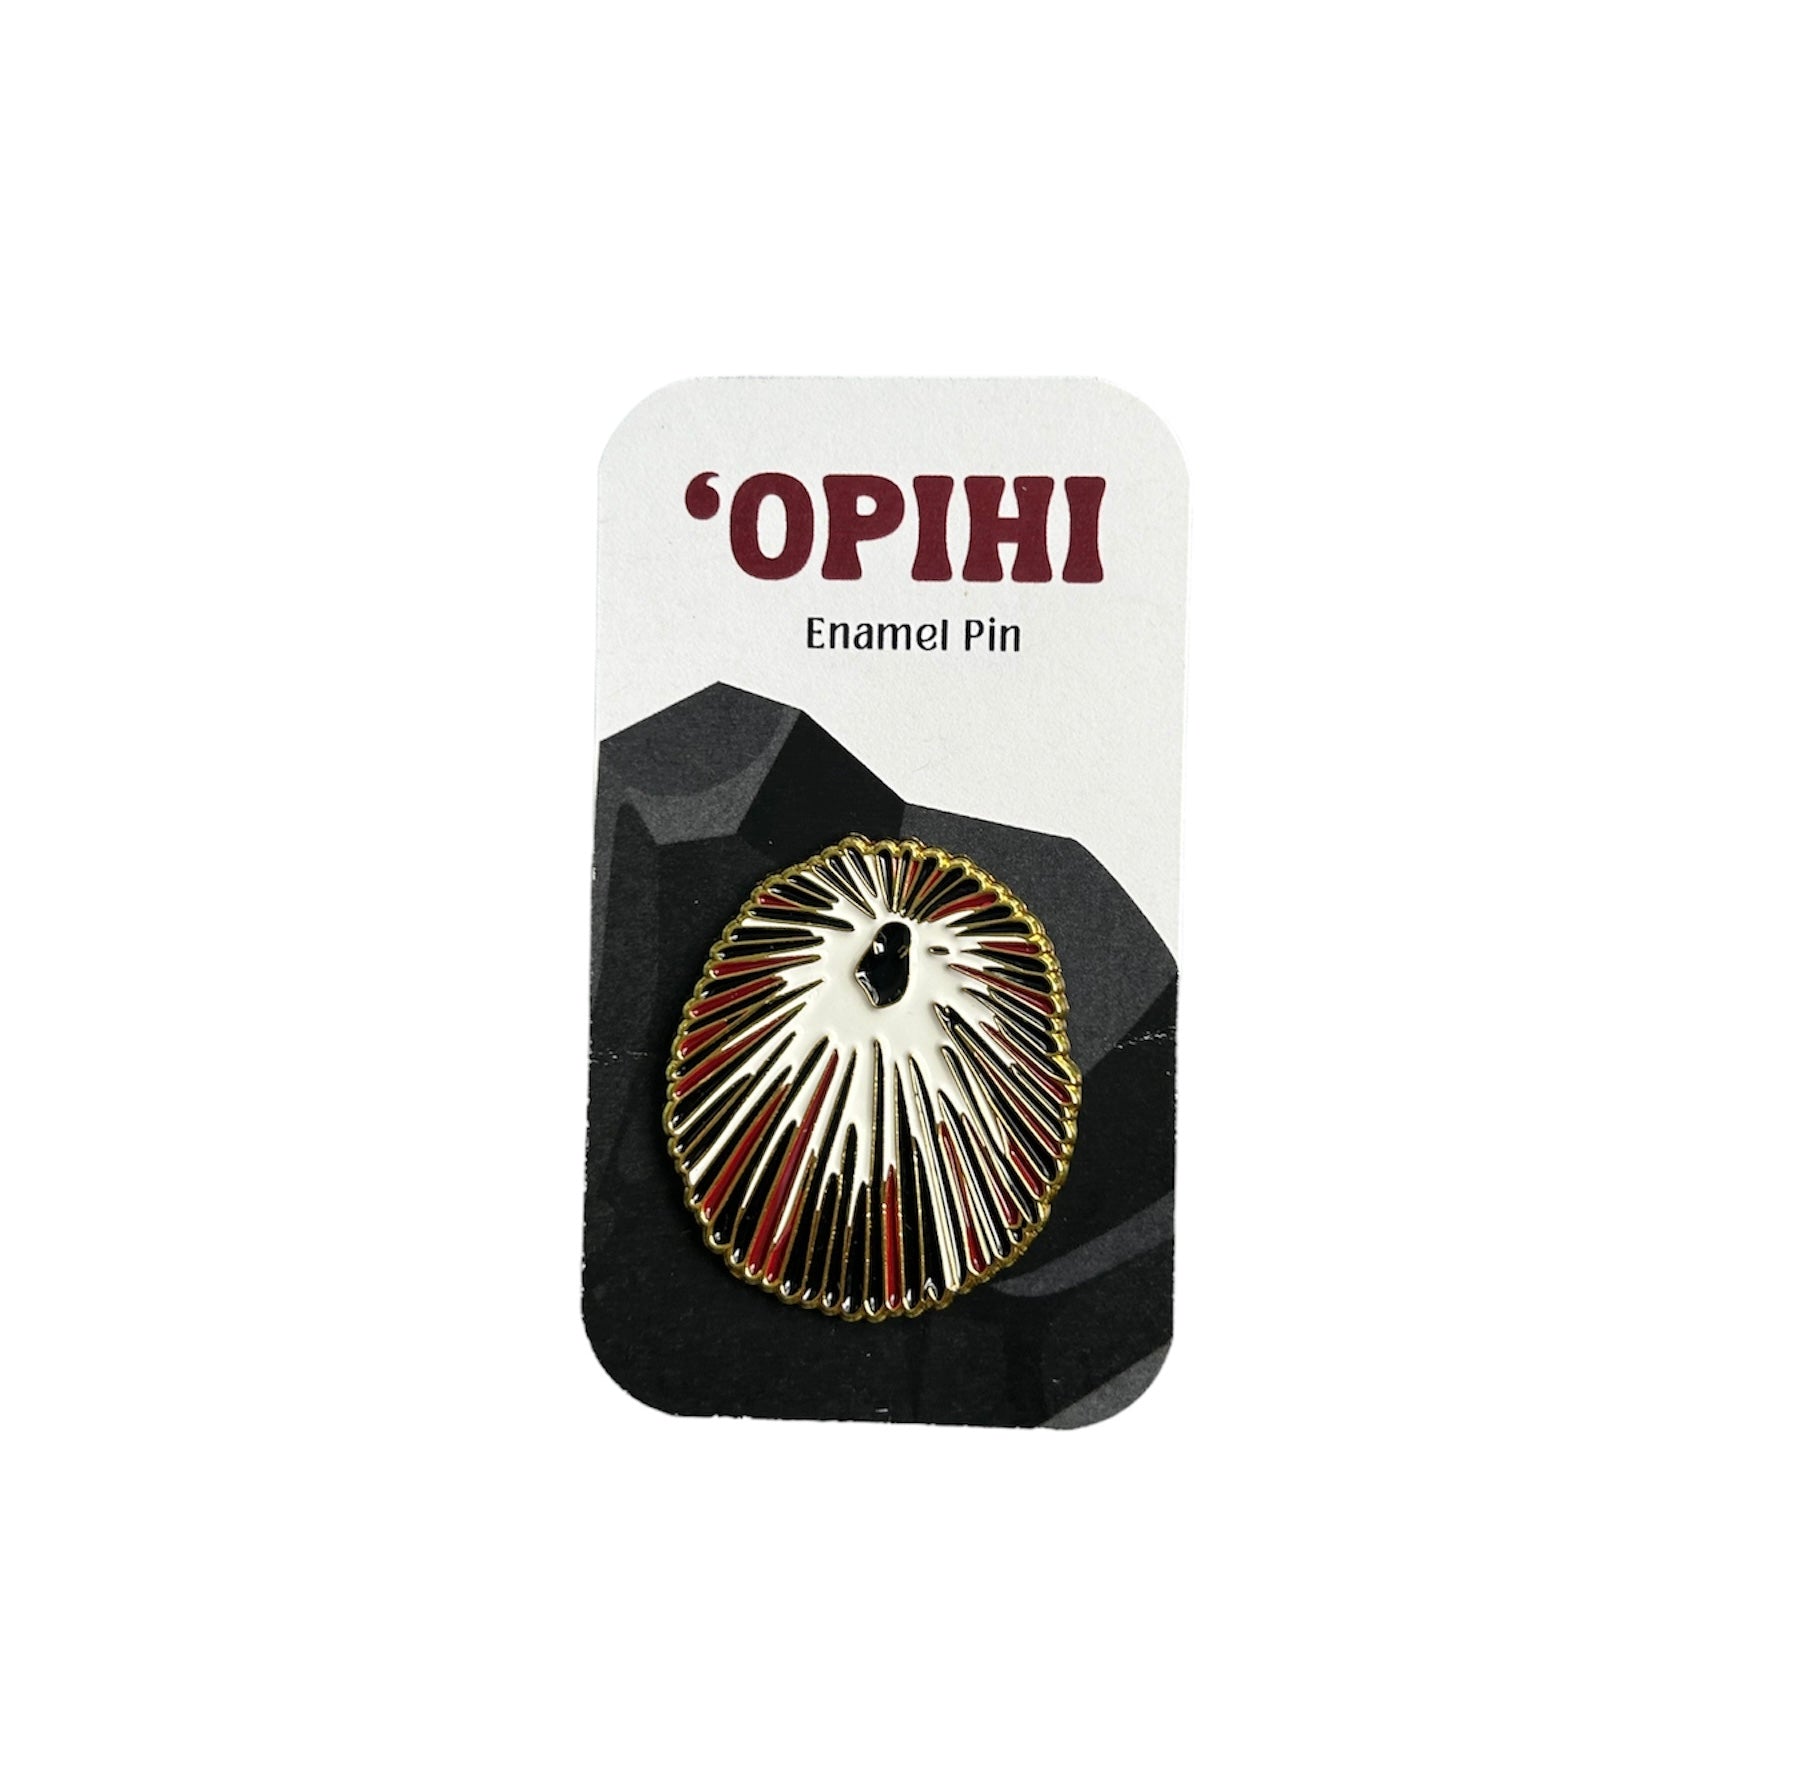 Pop-Up Mākeke - Mahea Leah - 'Opihi Enamel Pin - Front View